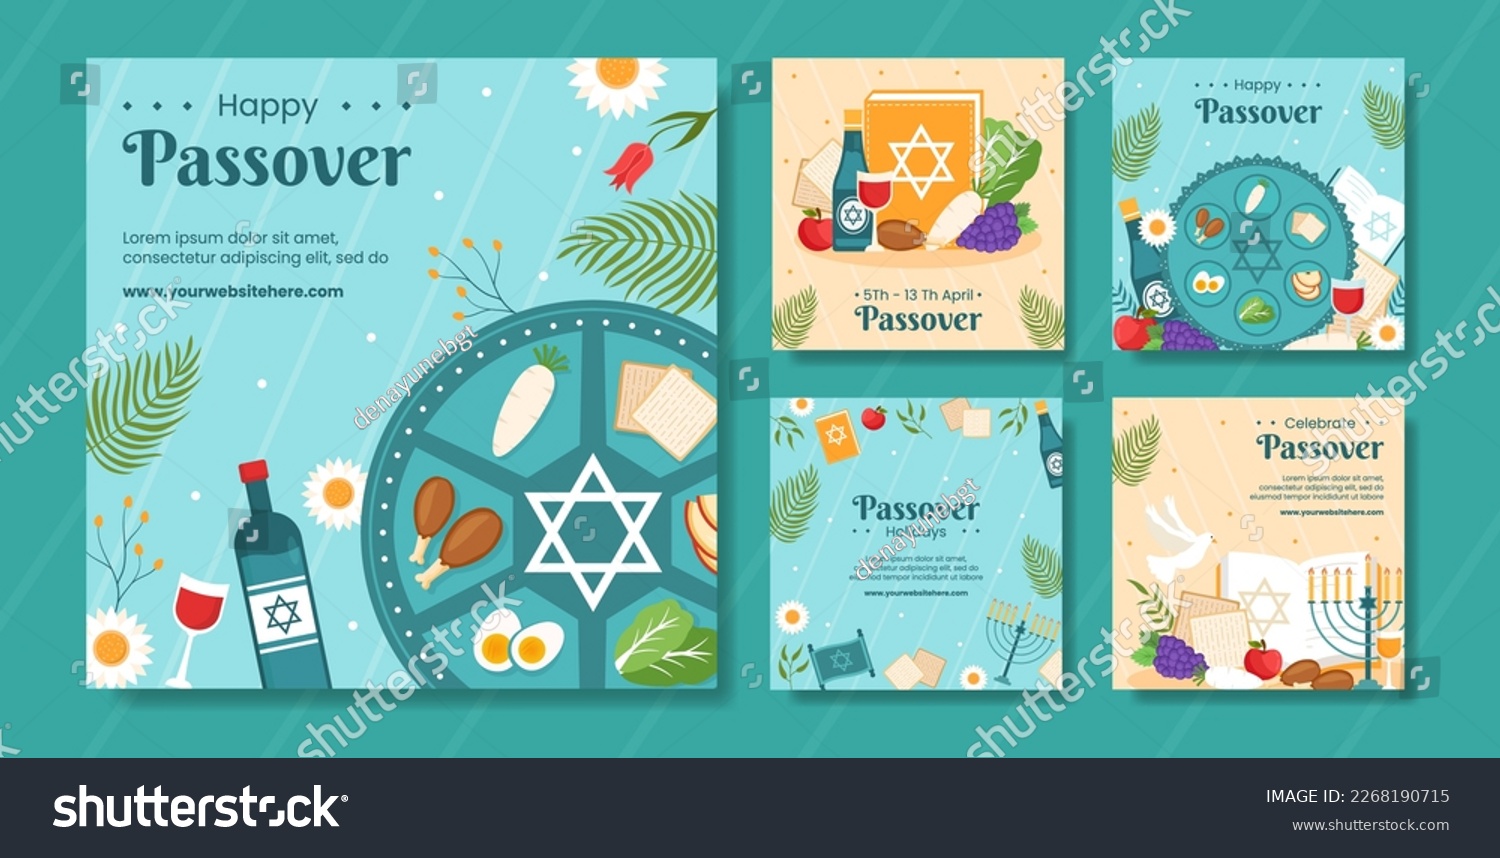 Happy Passover Jewish Holiday Social Media Post Flat Cartoon Hand Drawn Templates Illustration #2268190715